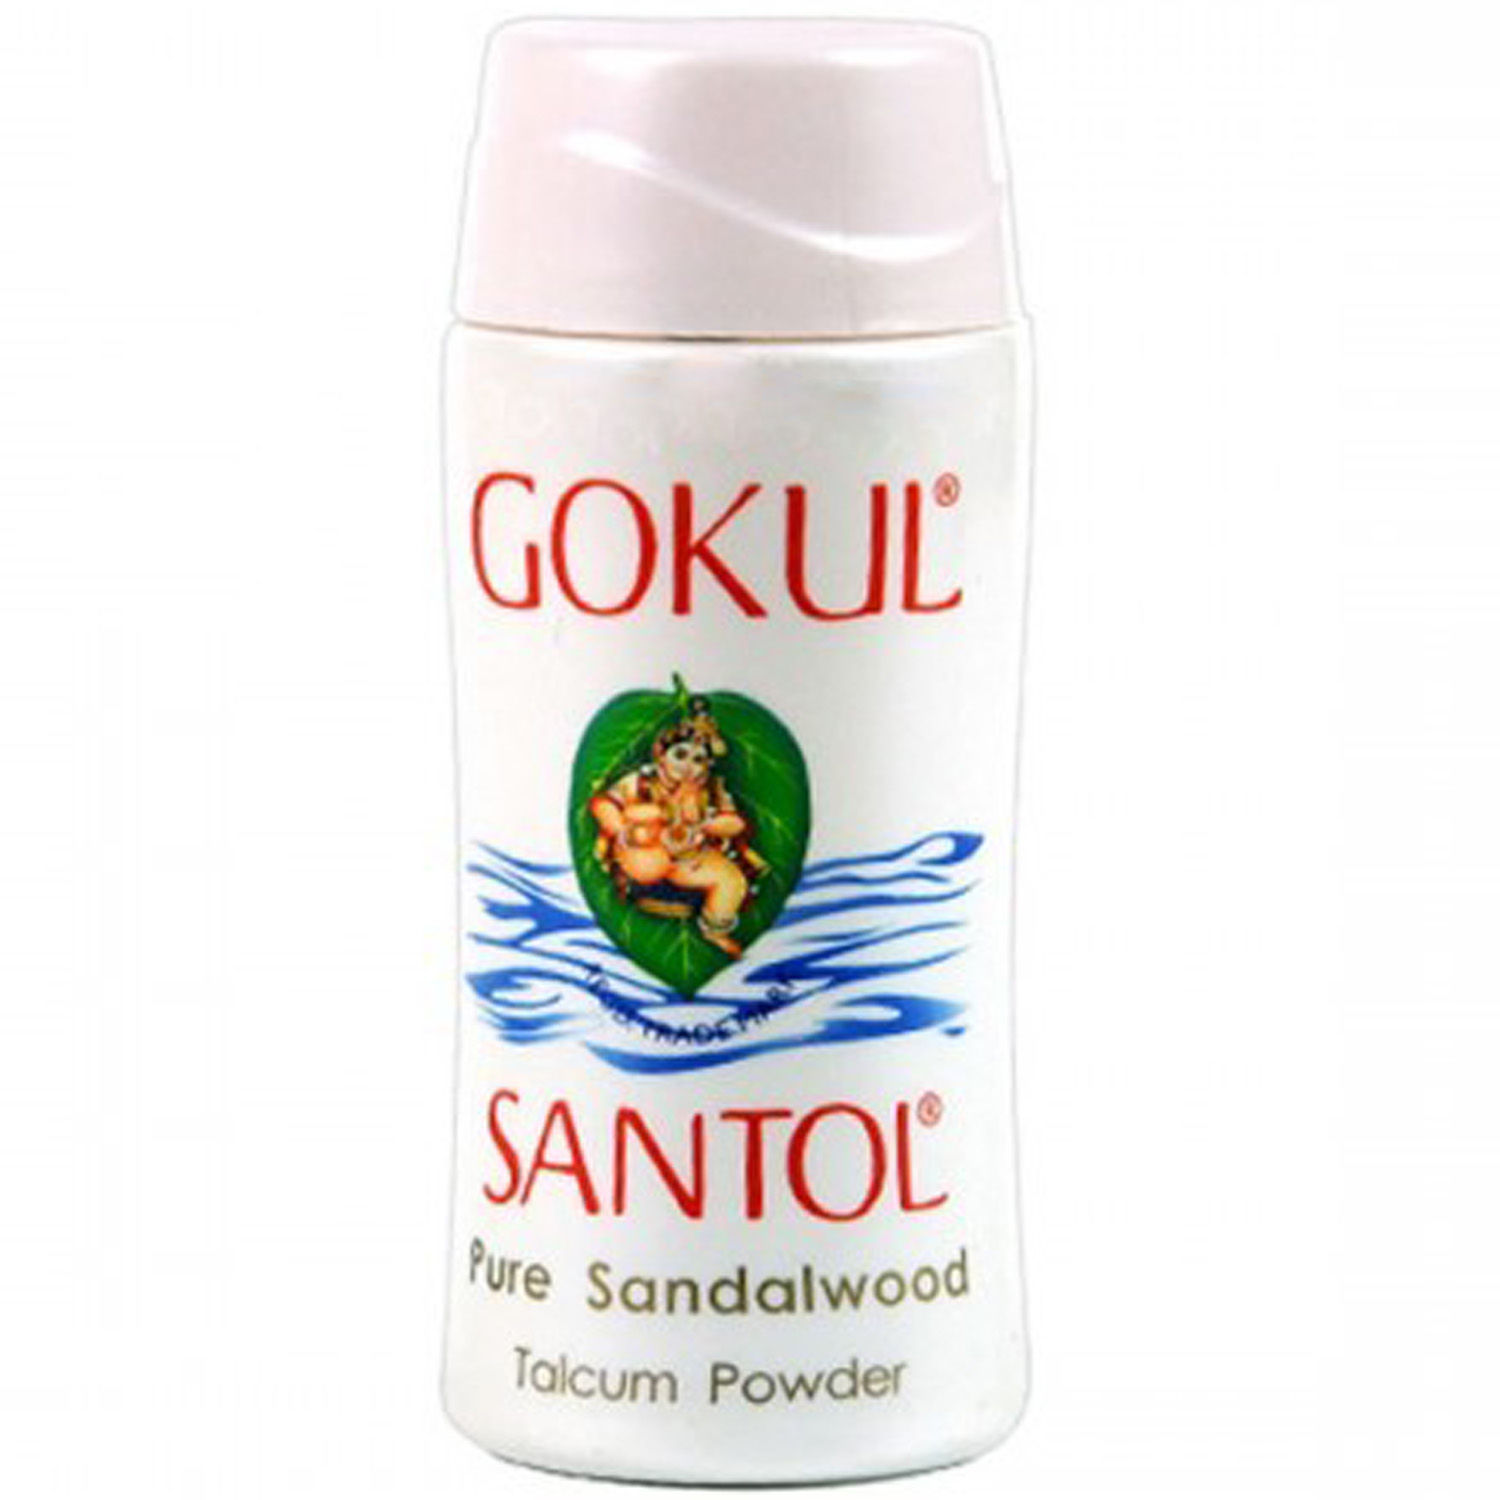 Gokul Santol Sandalwood Talcum Powder, 30 gm, Pack of 1 